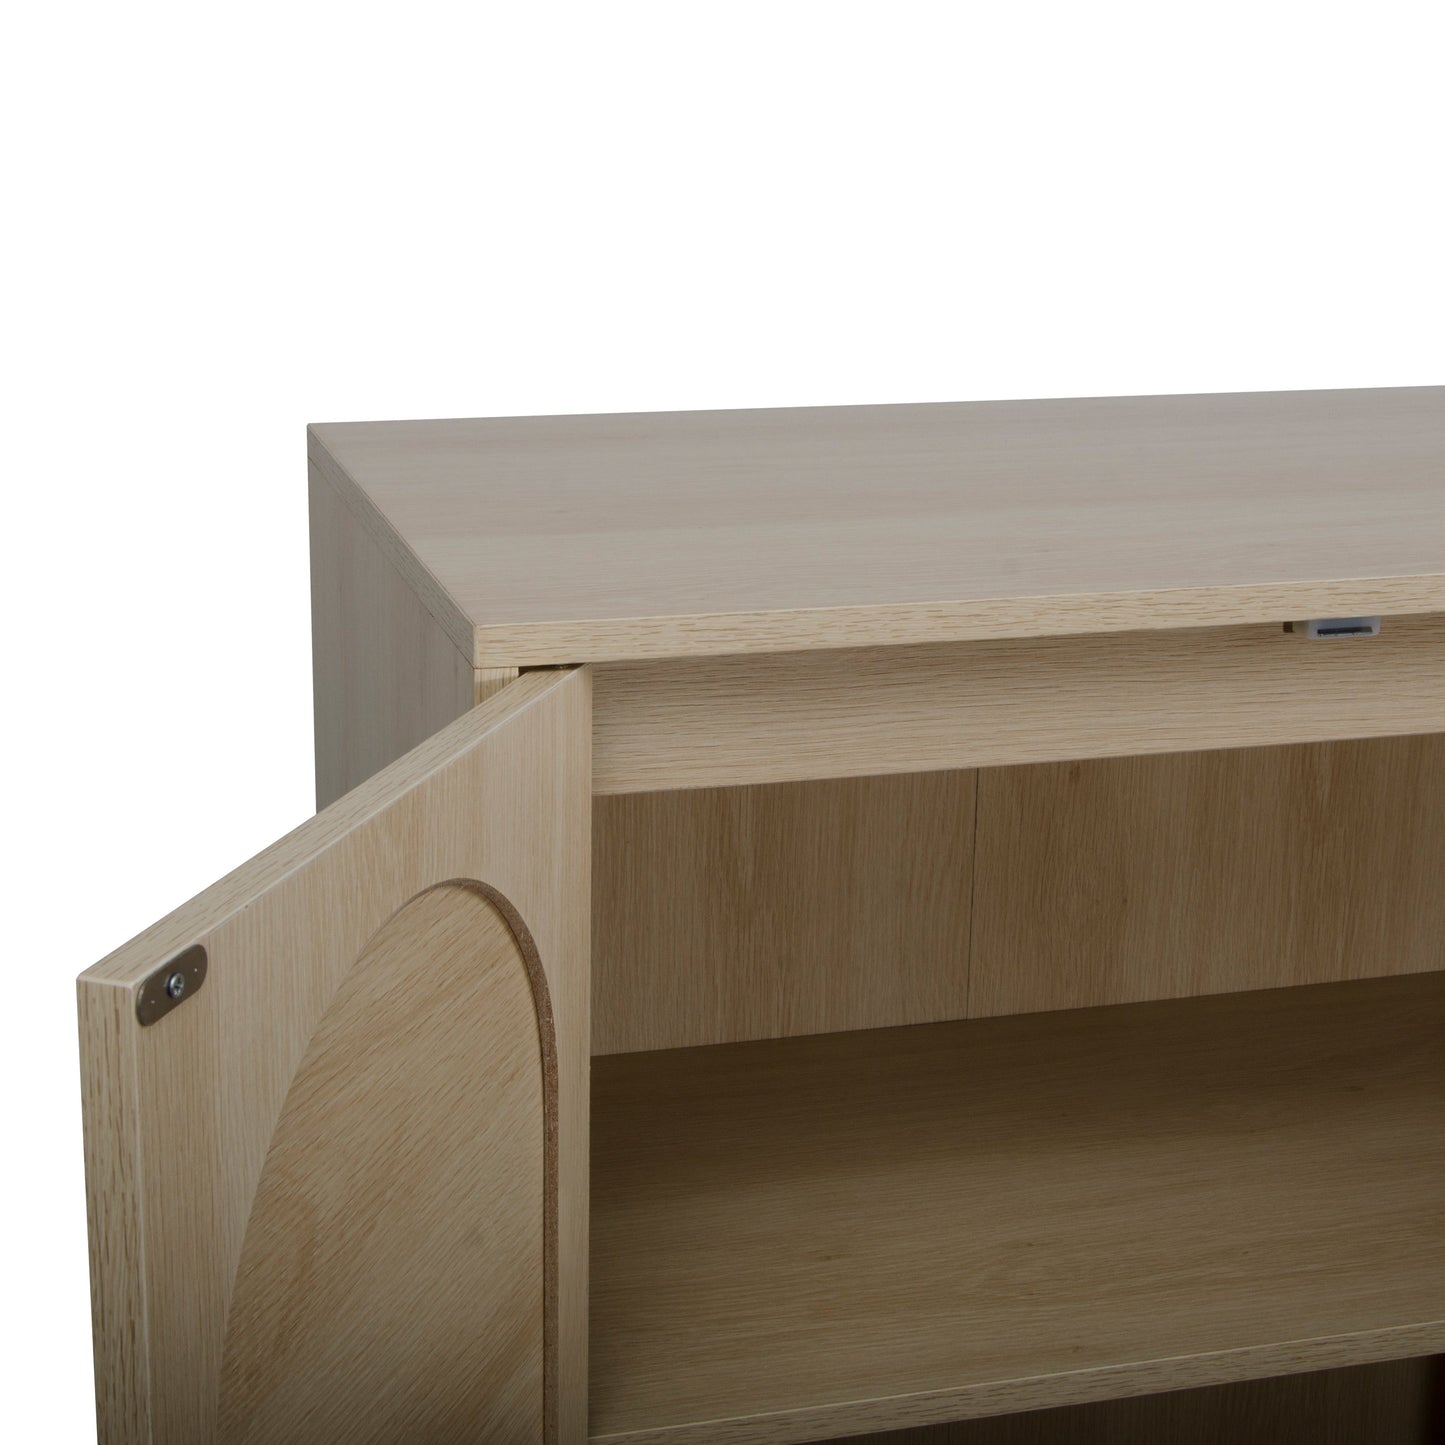 Set of 2, Allen 2 Door High Cabinet, Rattan, Built-in Adjustable Shelf, Easy Assembly, Free Standing Cabinet for Living Room Bedroom